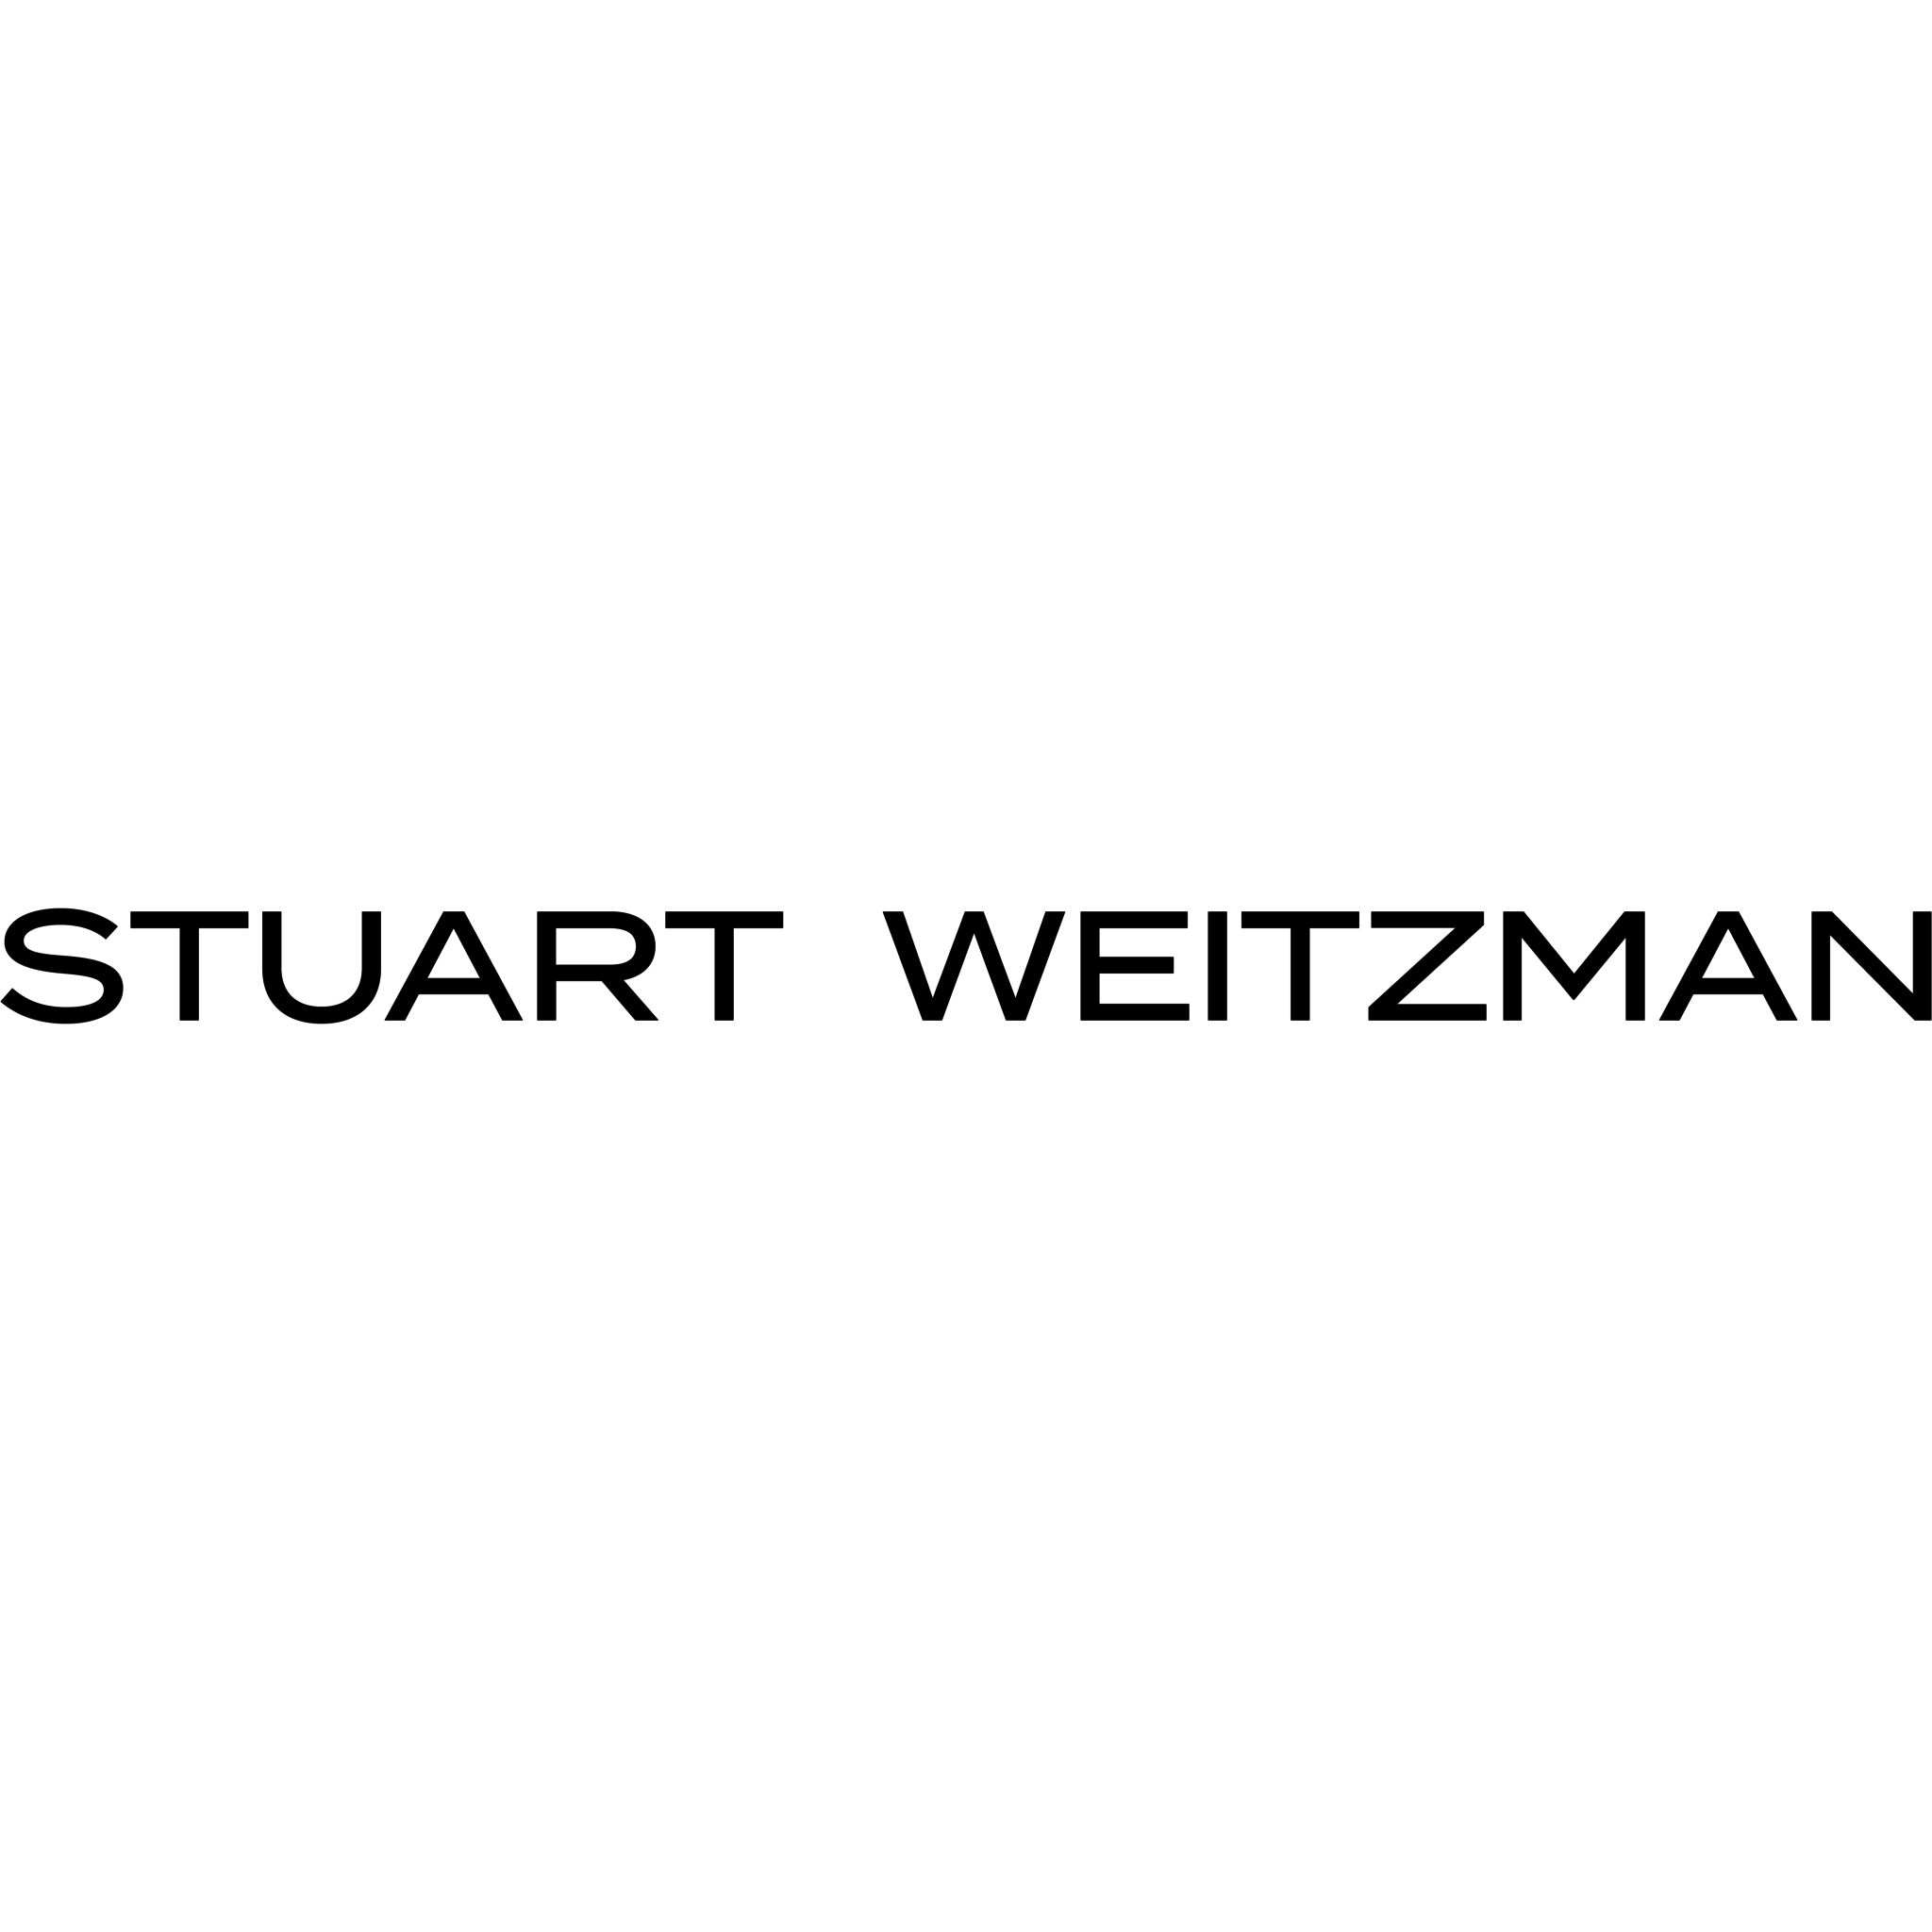 Stuart Weitzman - Clothing Manufacturers & Wholesalers